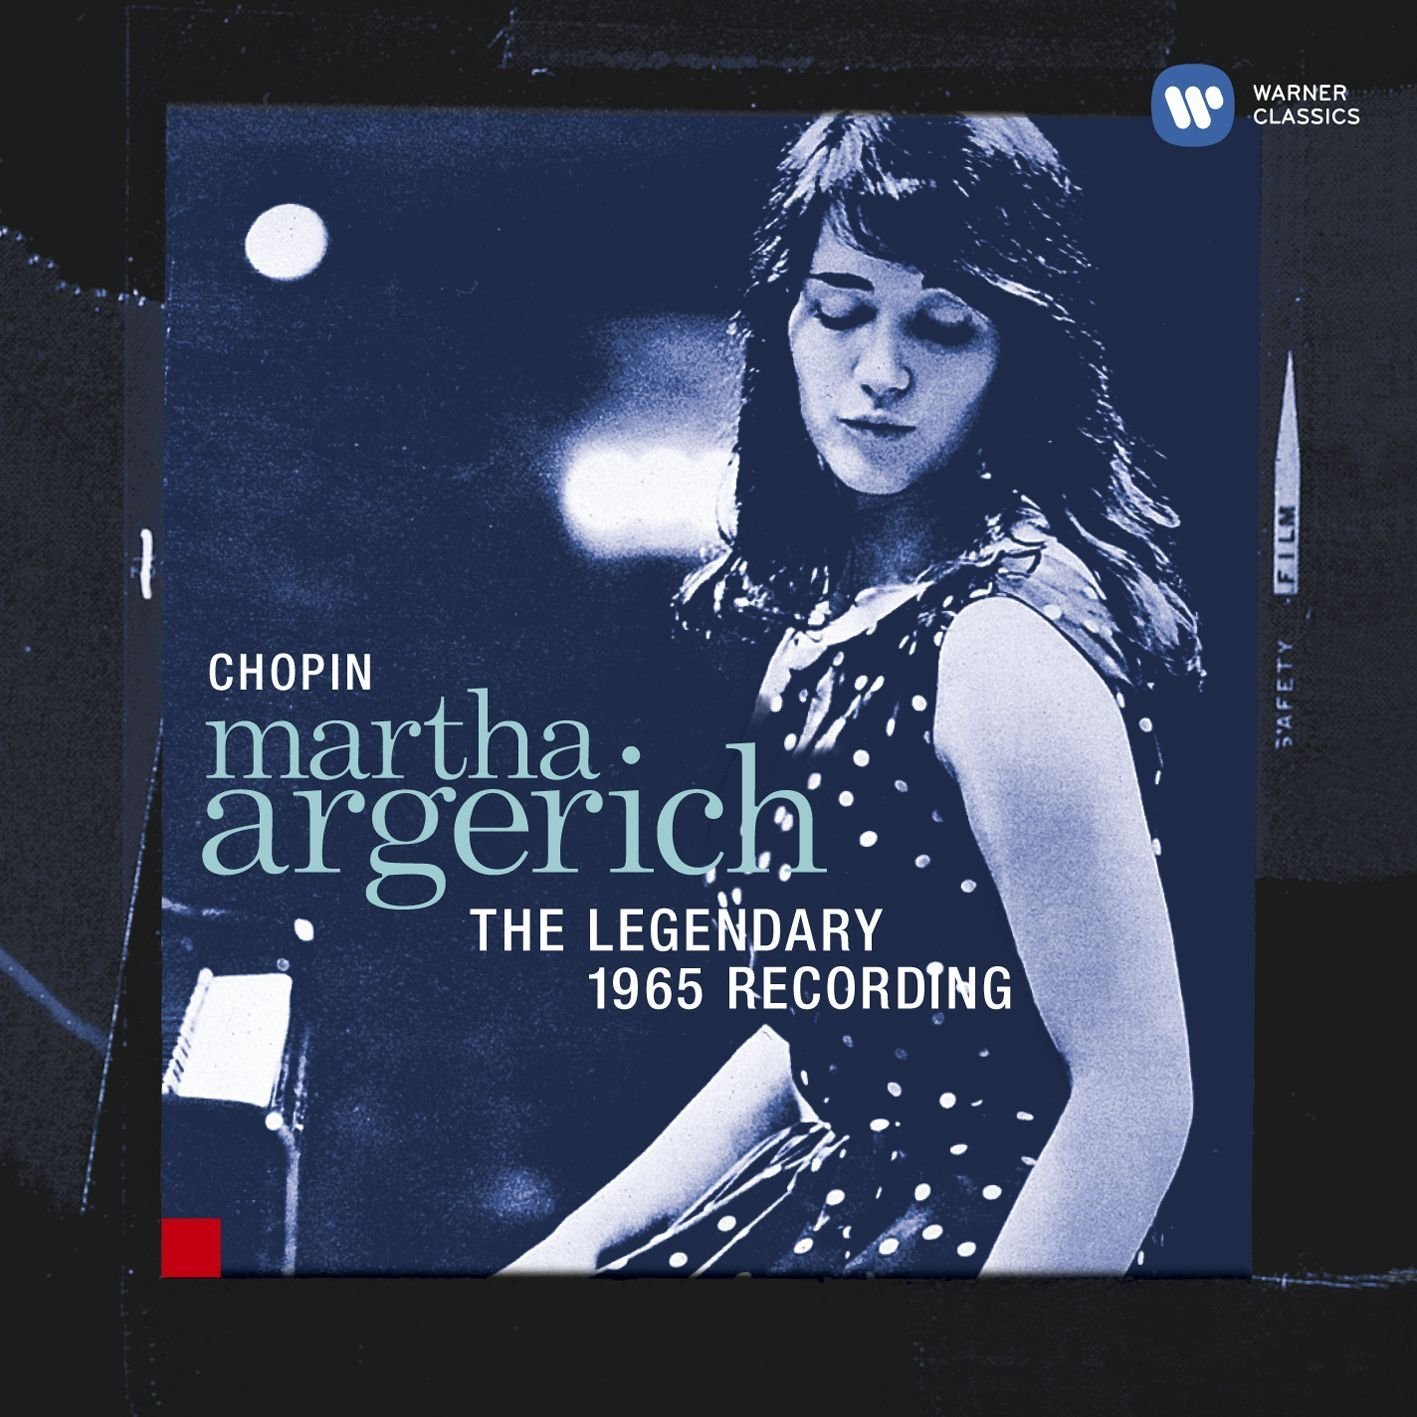 Chopin - The Legendary 1965 Recording